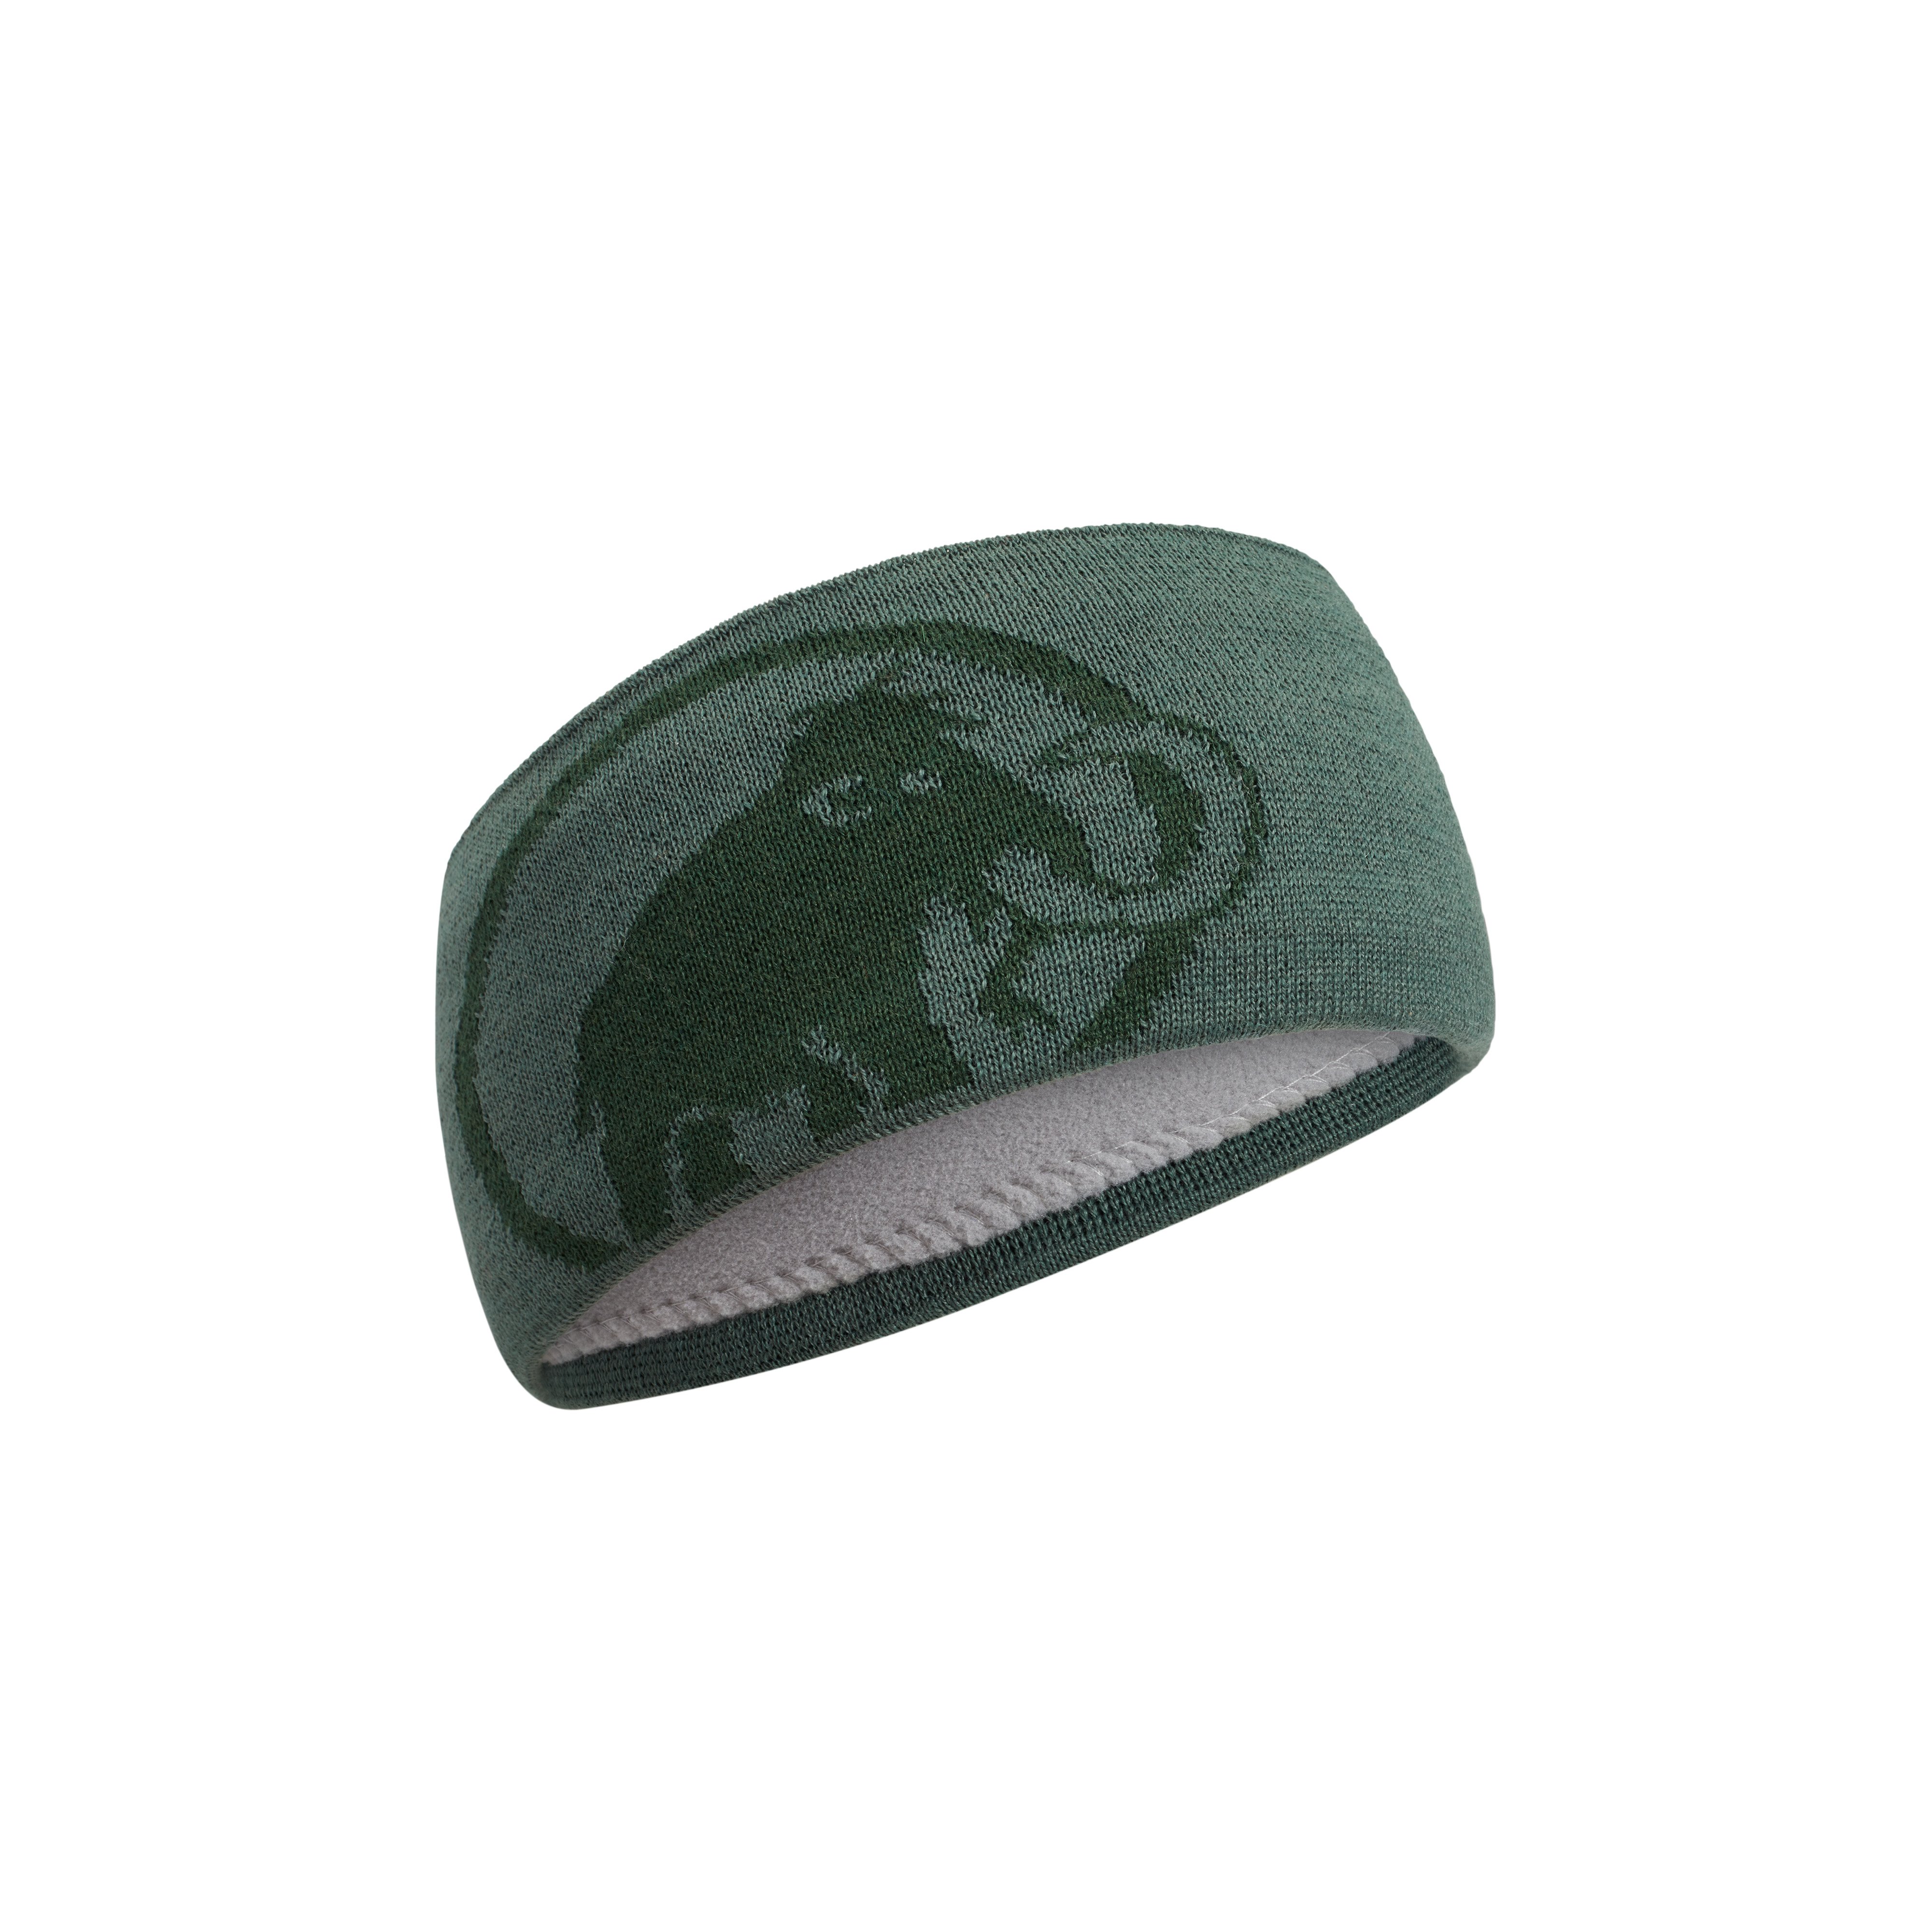 Tweak Headband - dark jade-woods, one size product image